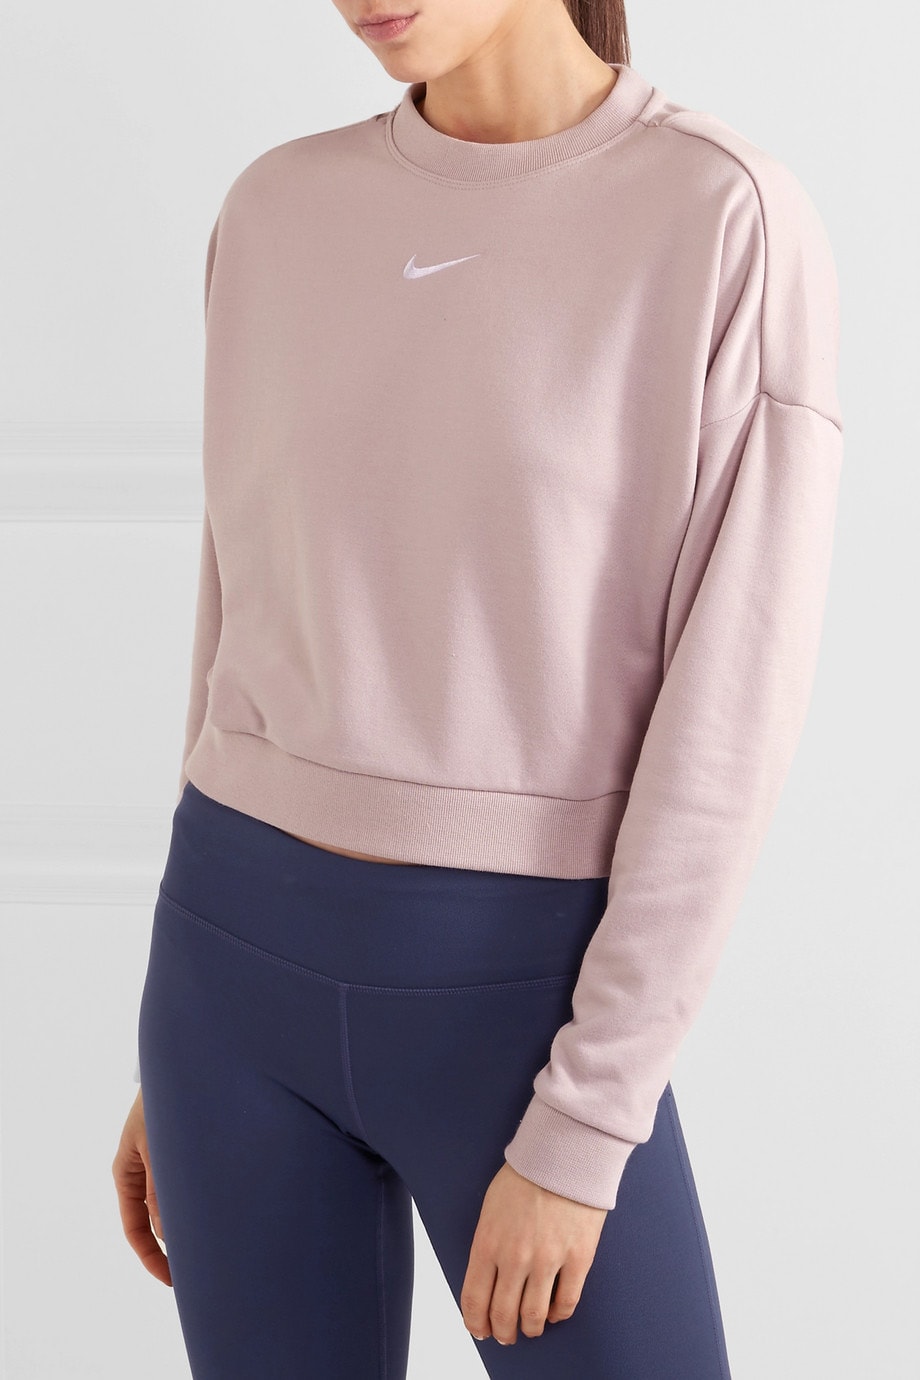 Nike womens pastel pale light pink sweatshirt swoosh logo cutout where to buy minimal